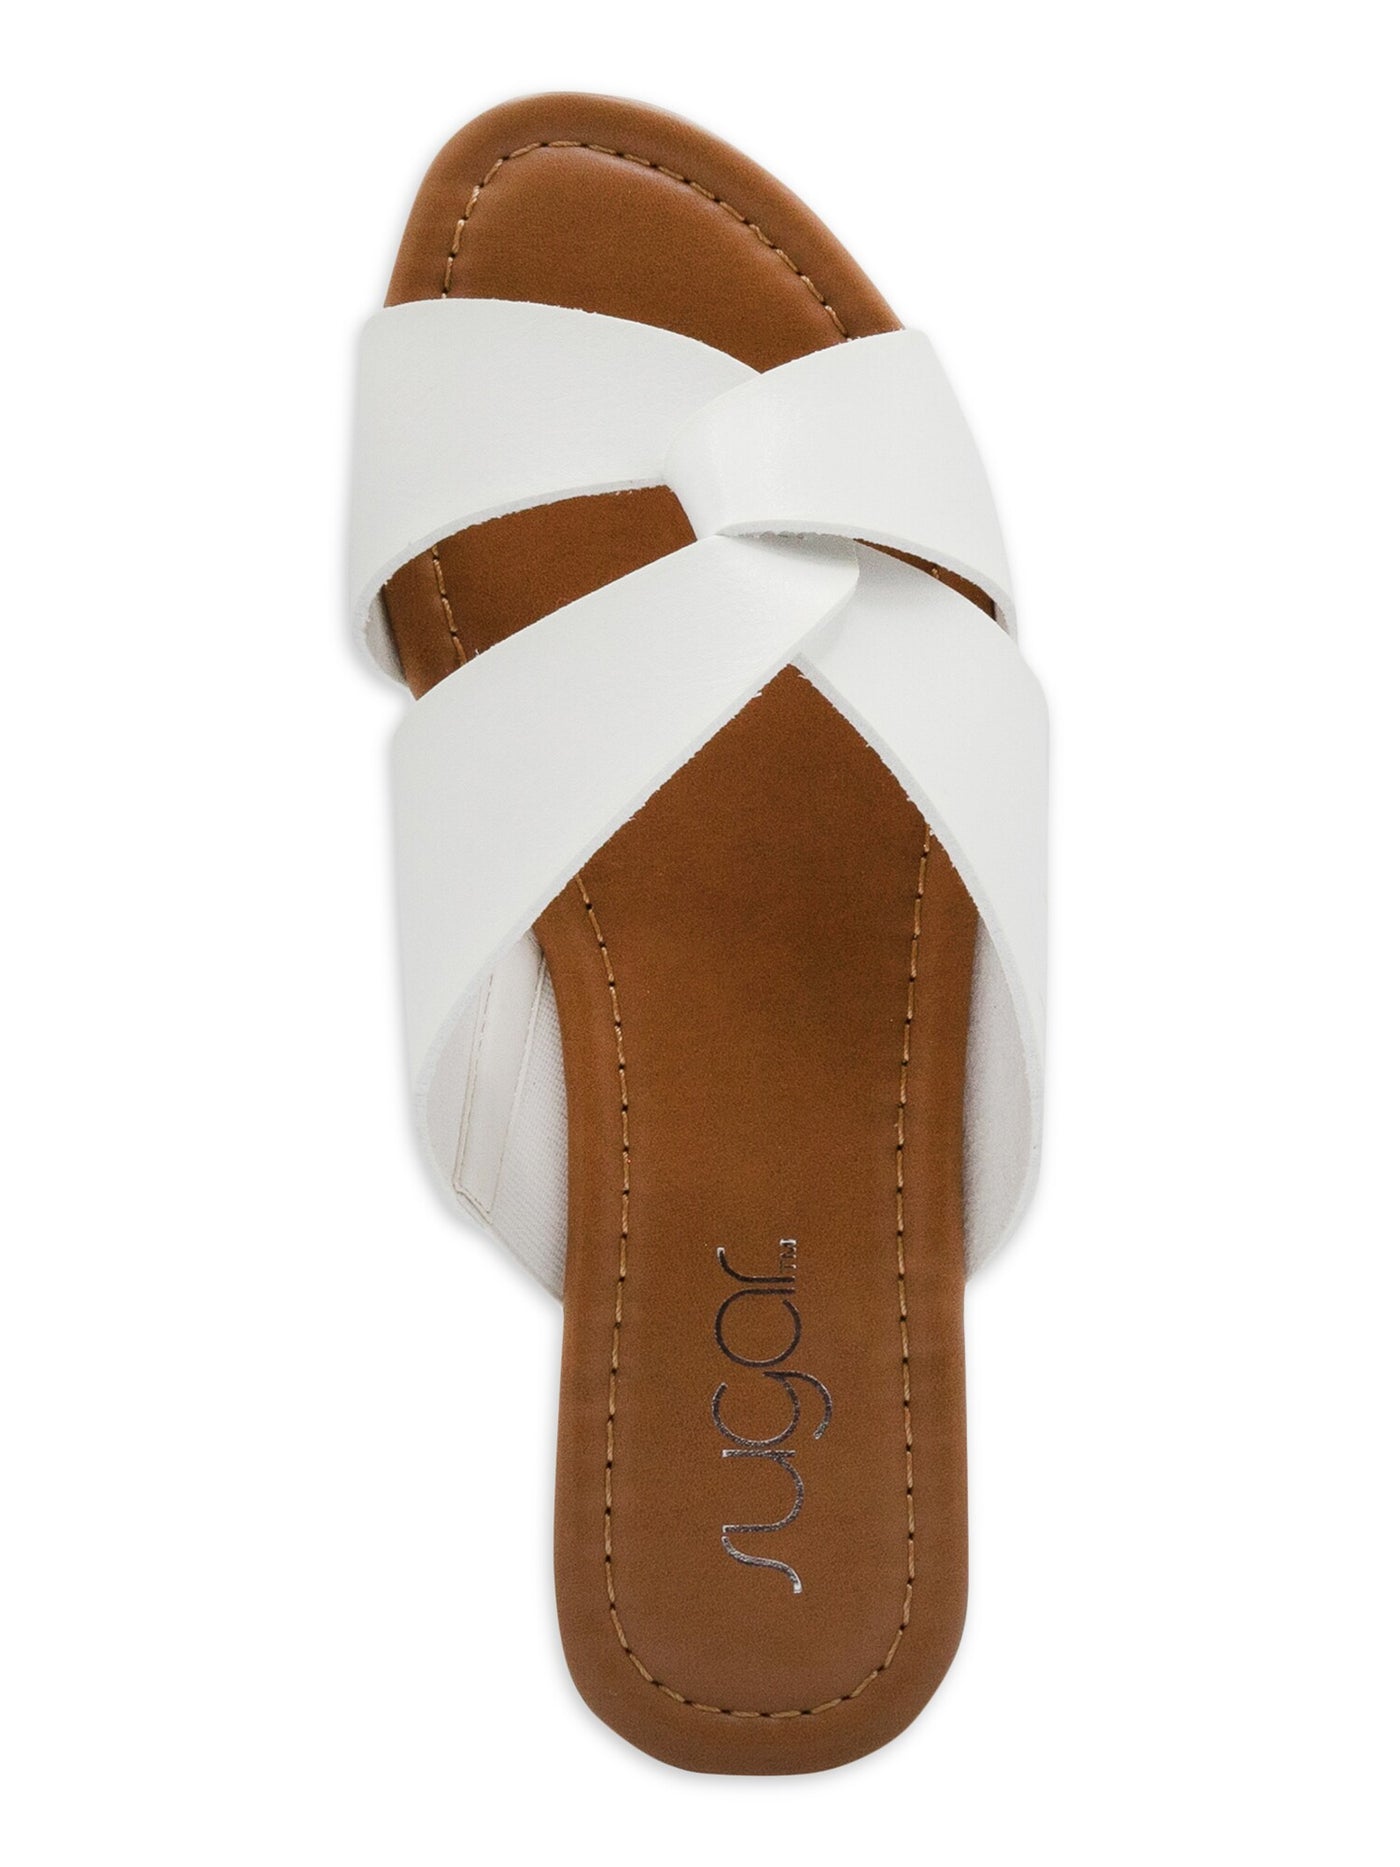 SUGAR Womens White Crisscross Straps Comfort Woven Olena Round Toe Block Heel Slip On Slide Sandals Shoes 8.5 M